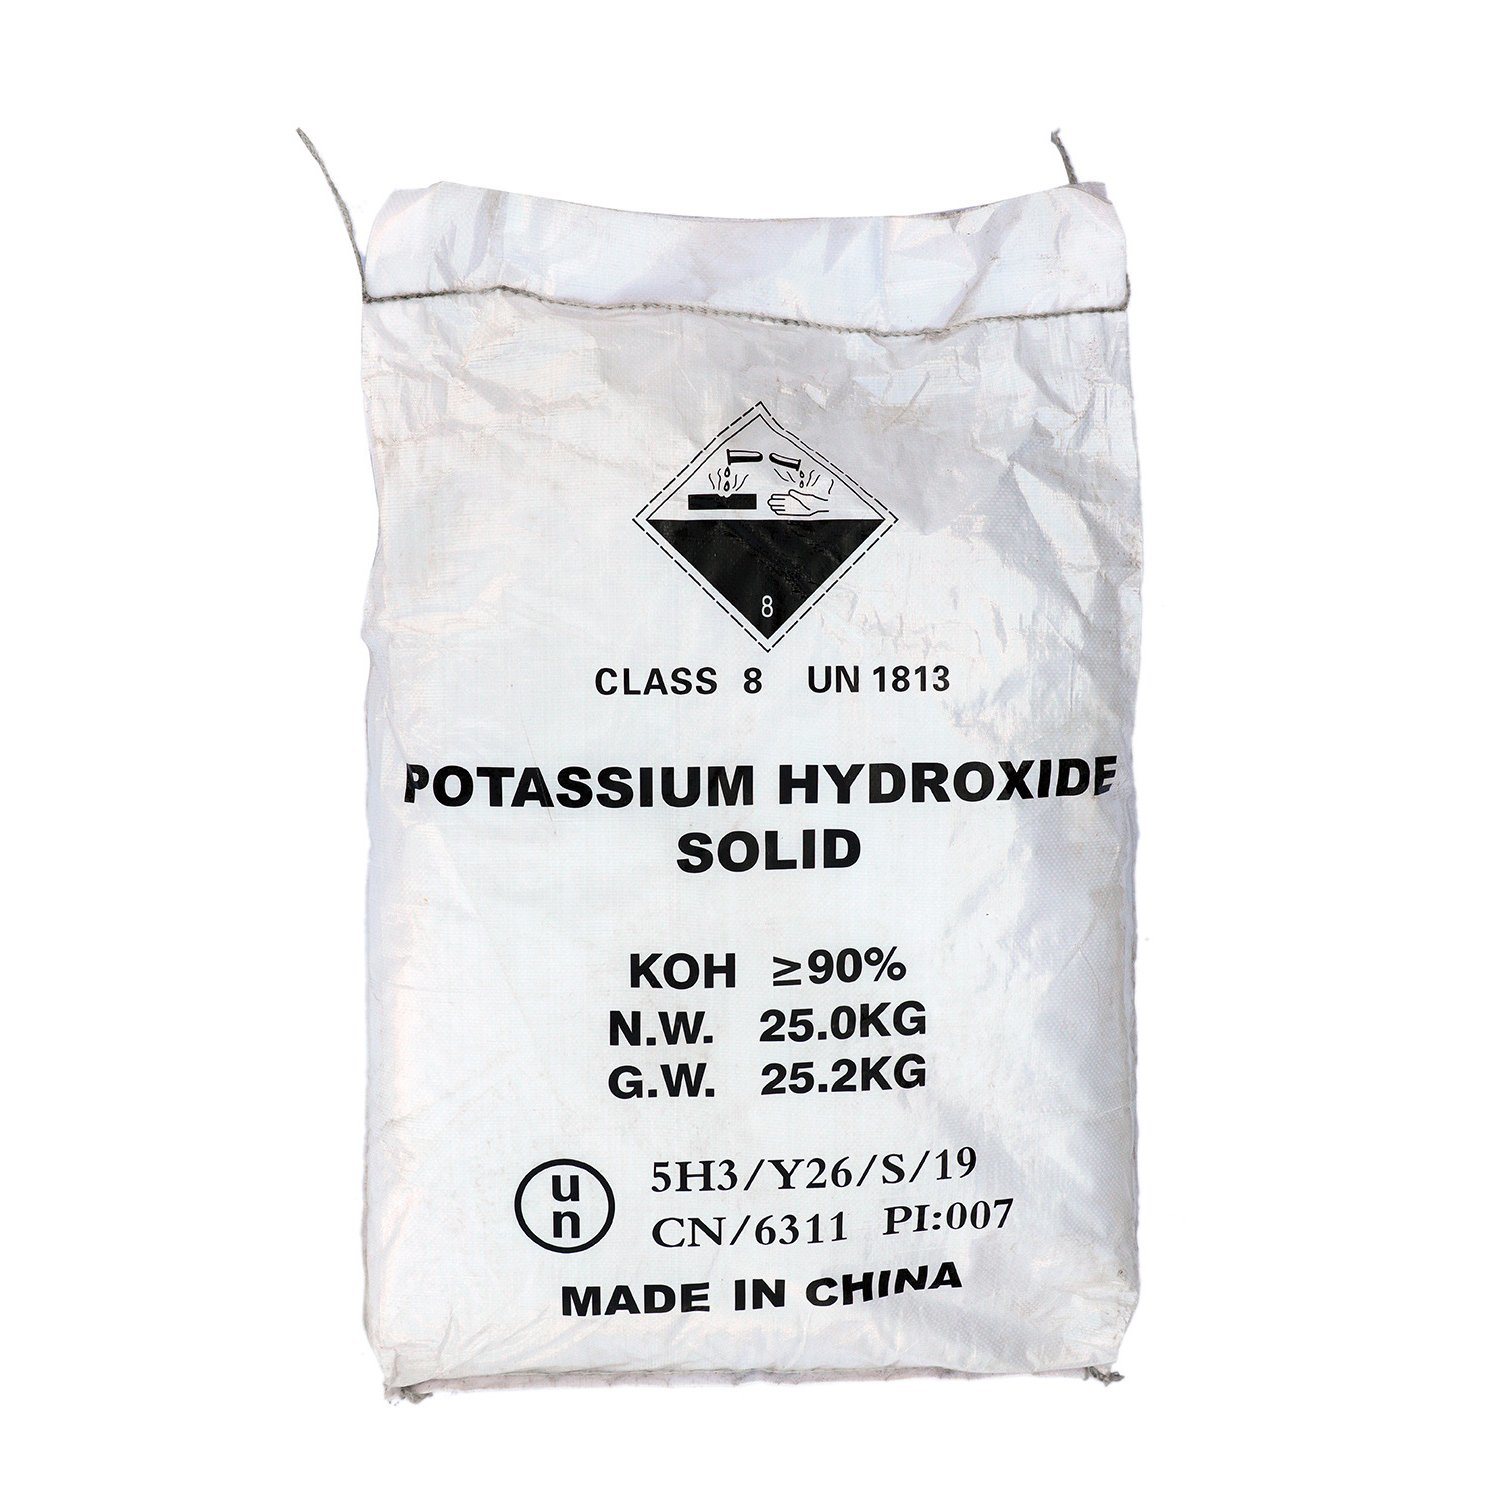 Potassium Hydroxide, Flakes 